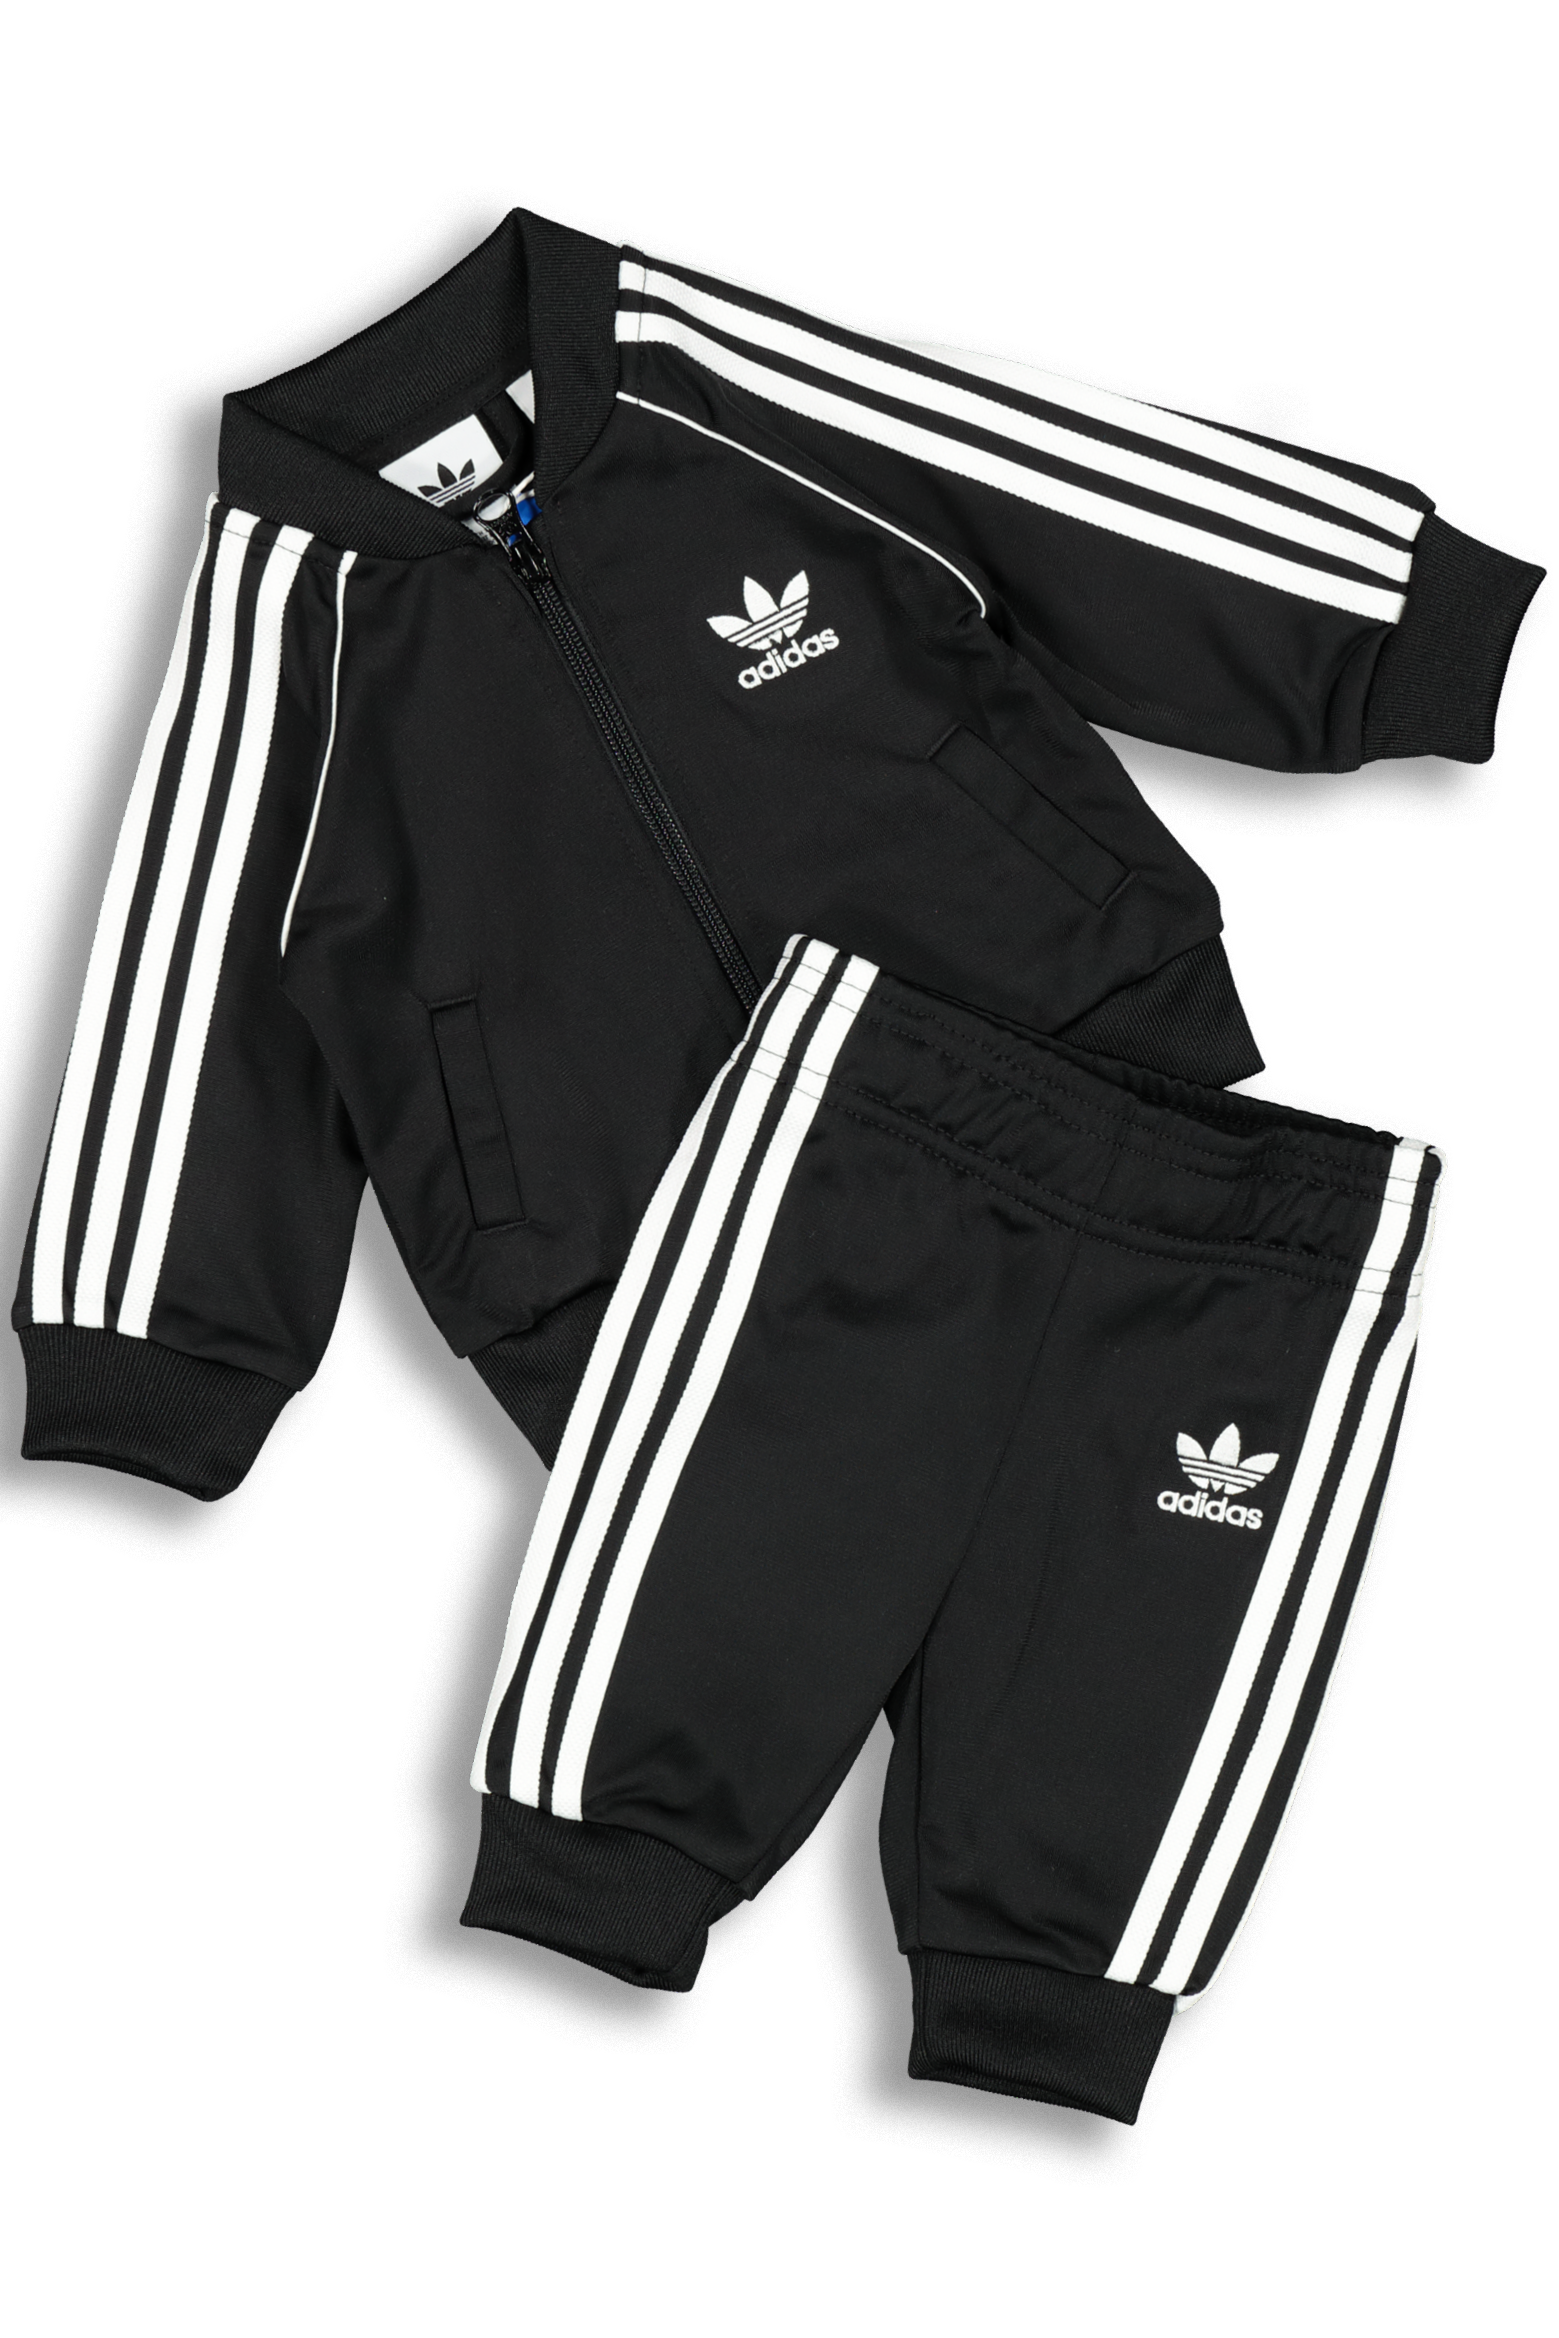 Adidas Kids Superstar Suit Black/White 